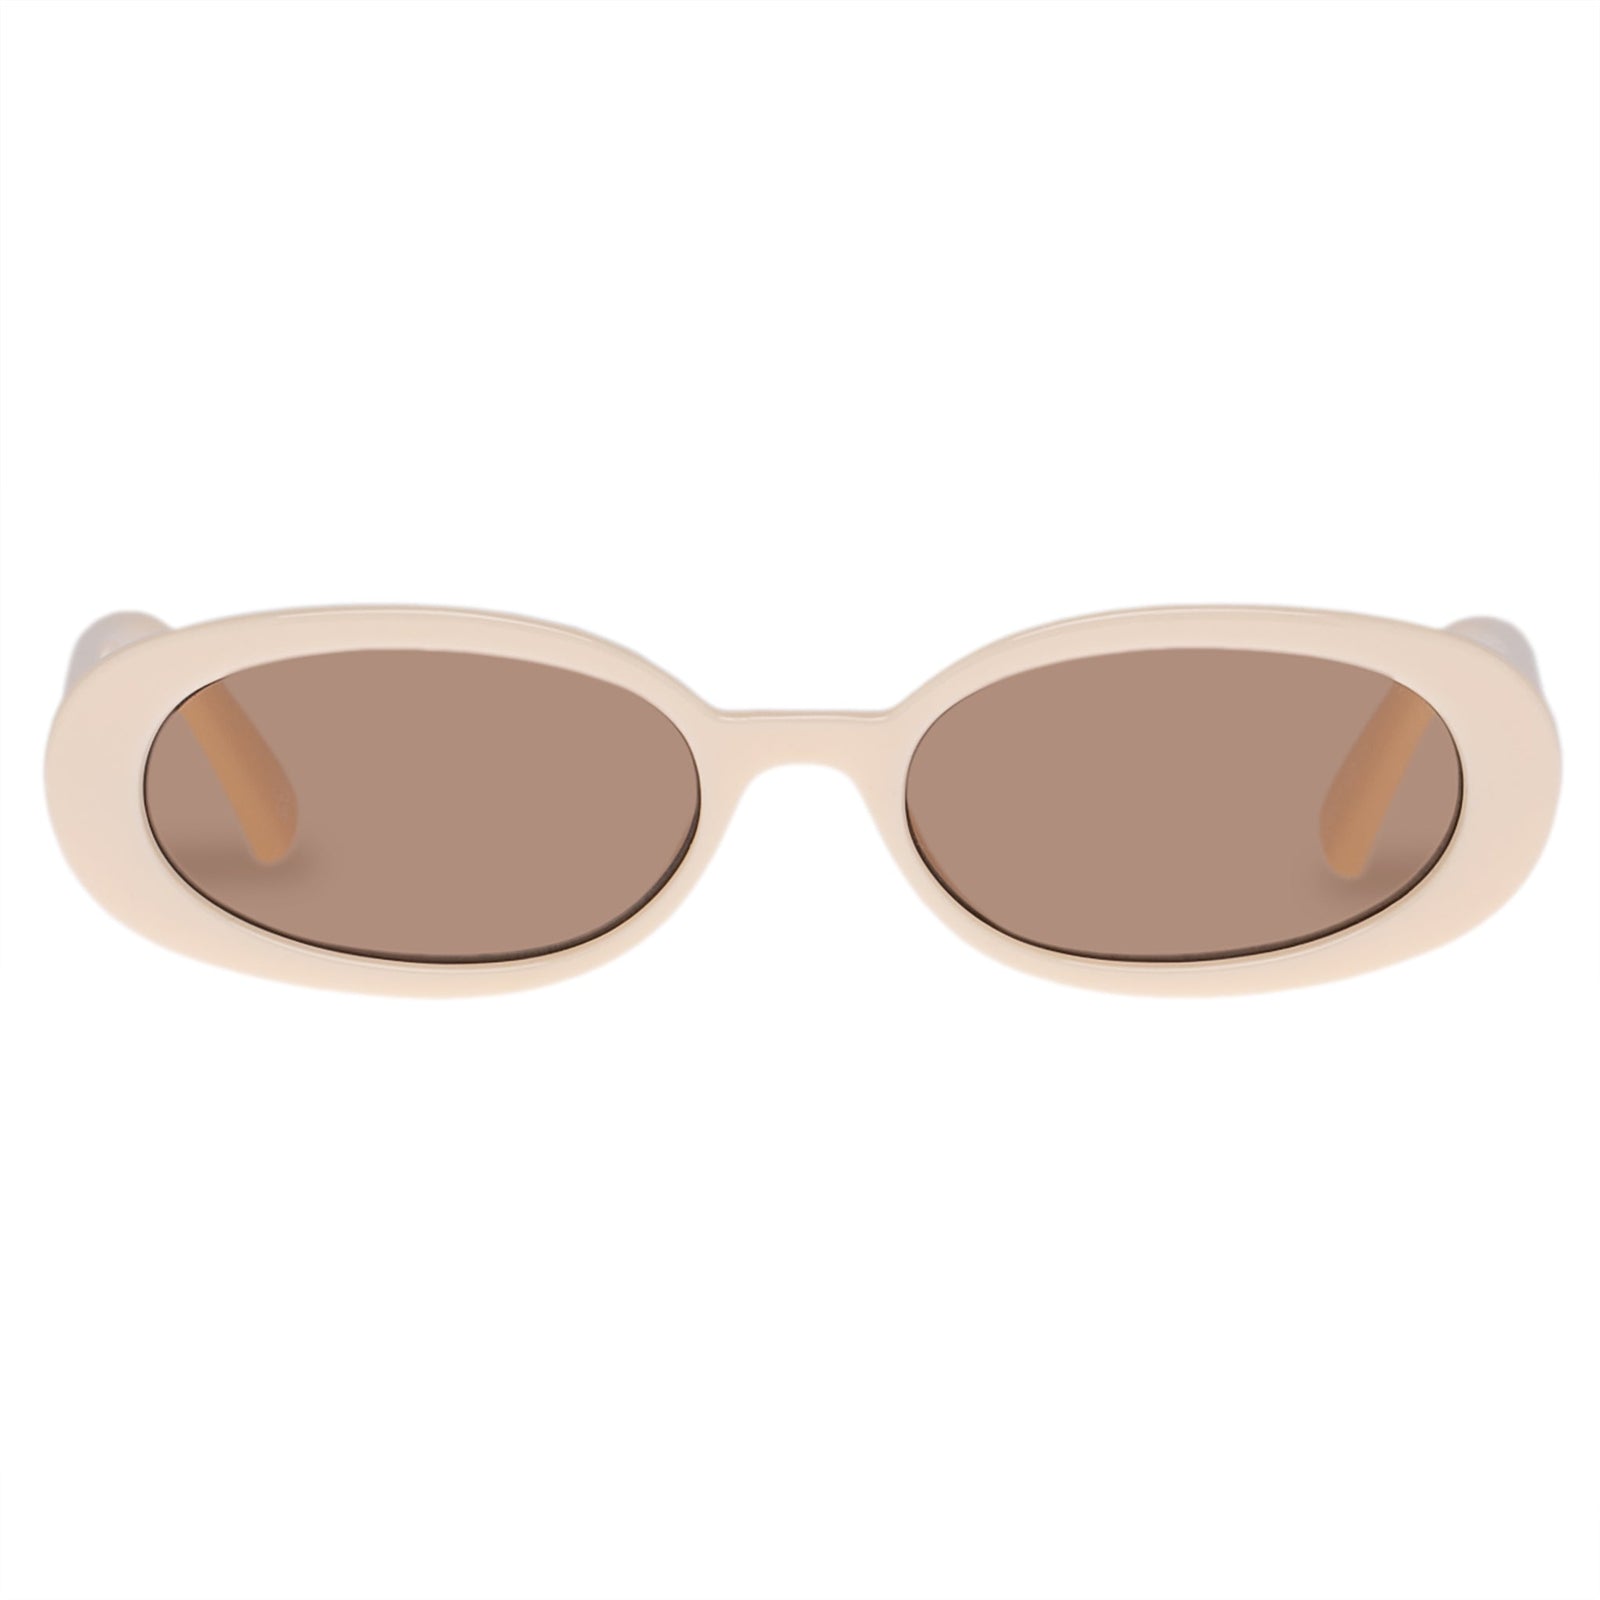 Buy Women's Ovals Sunglasses at Best Price online